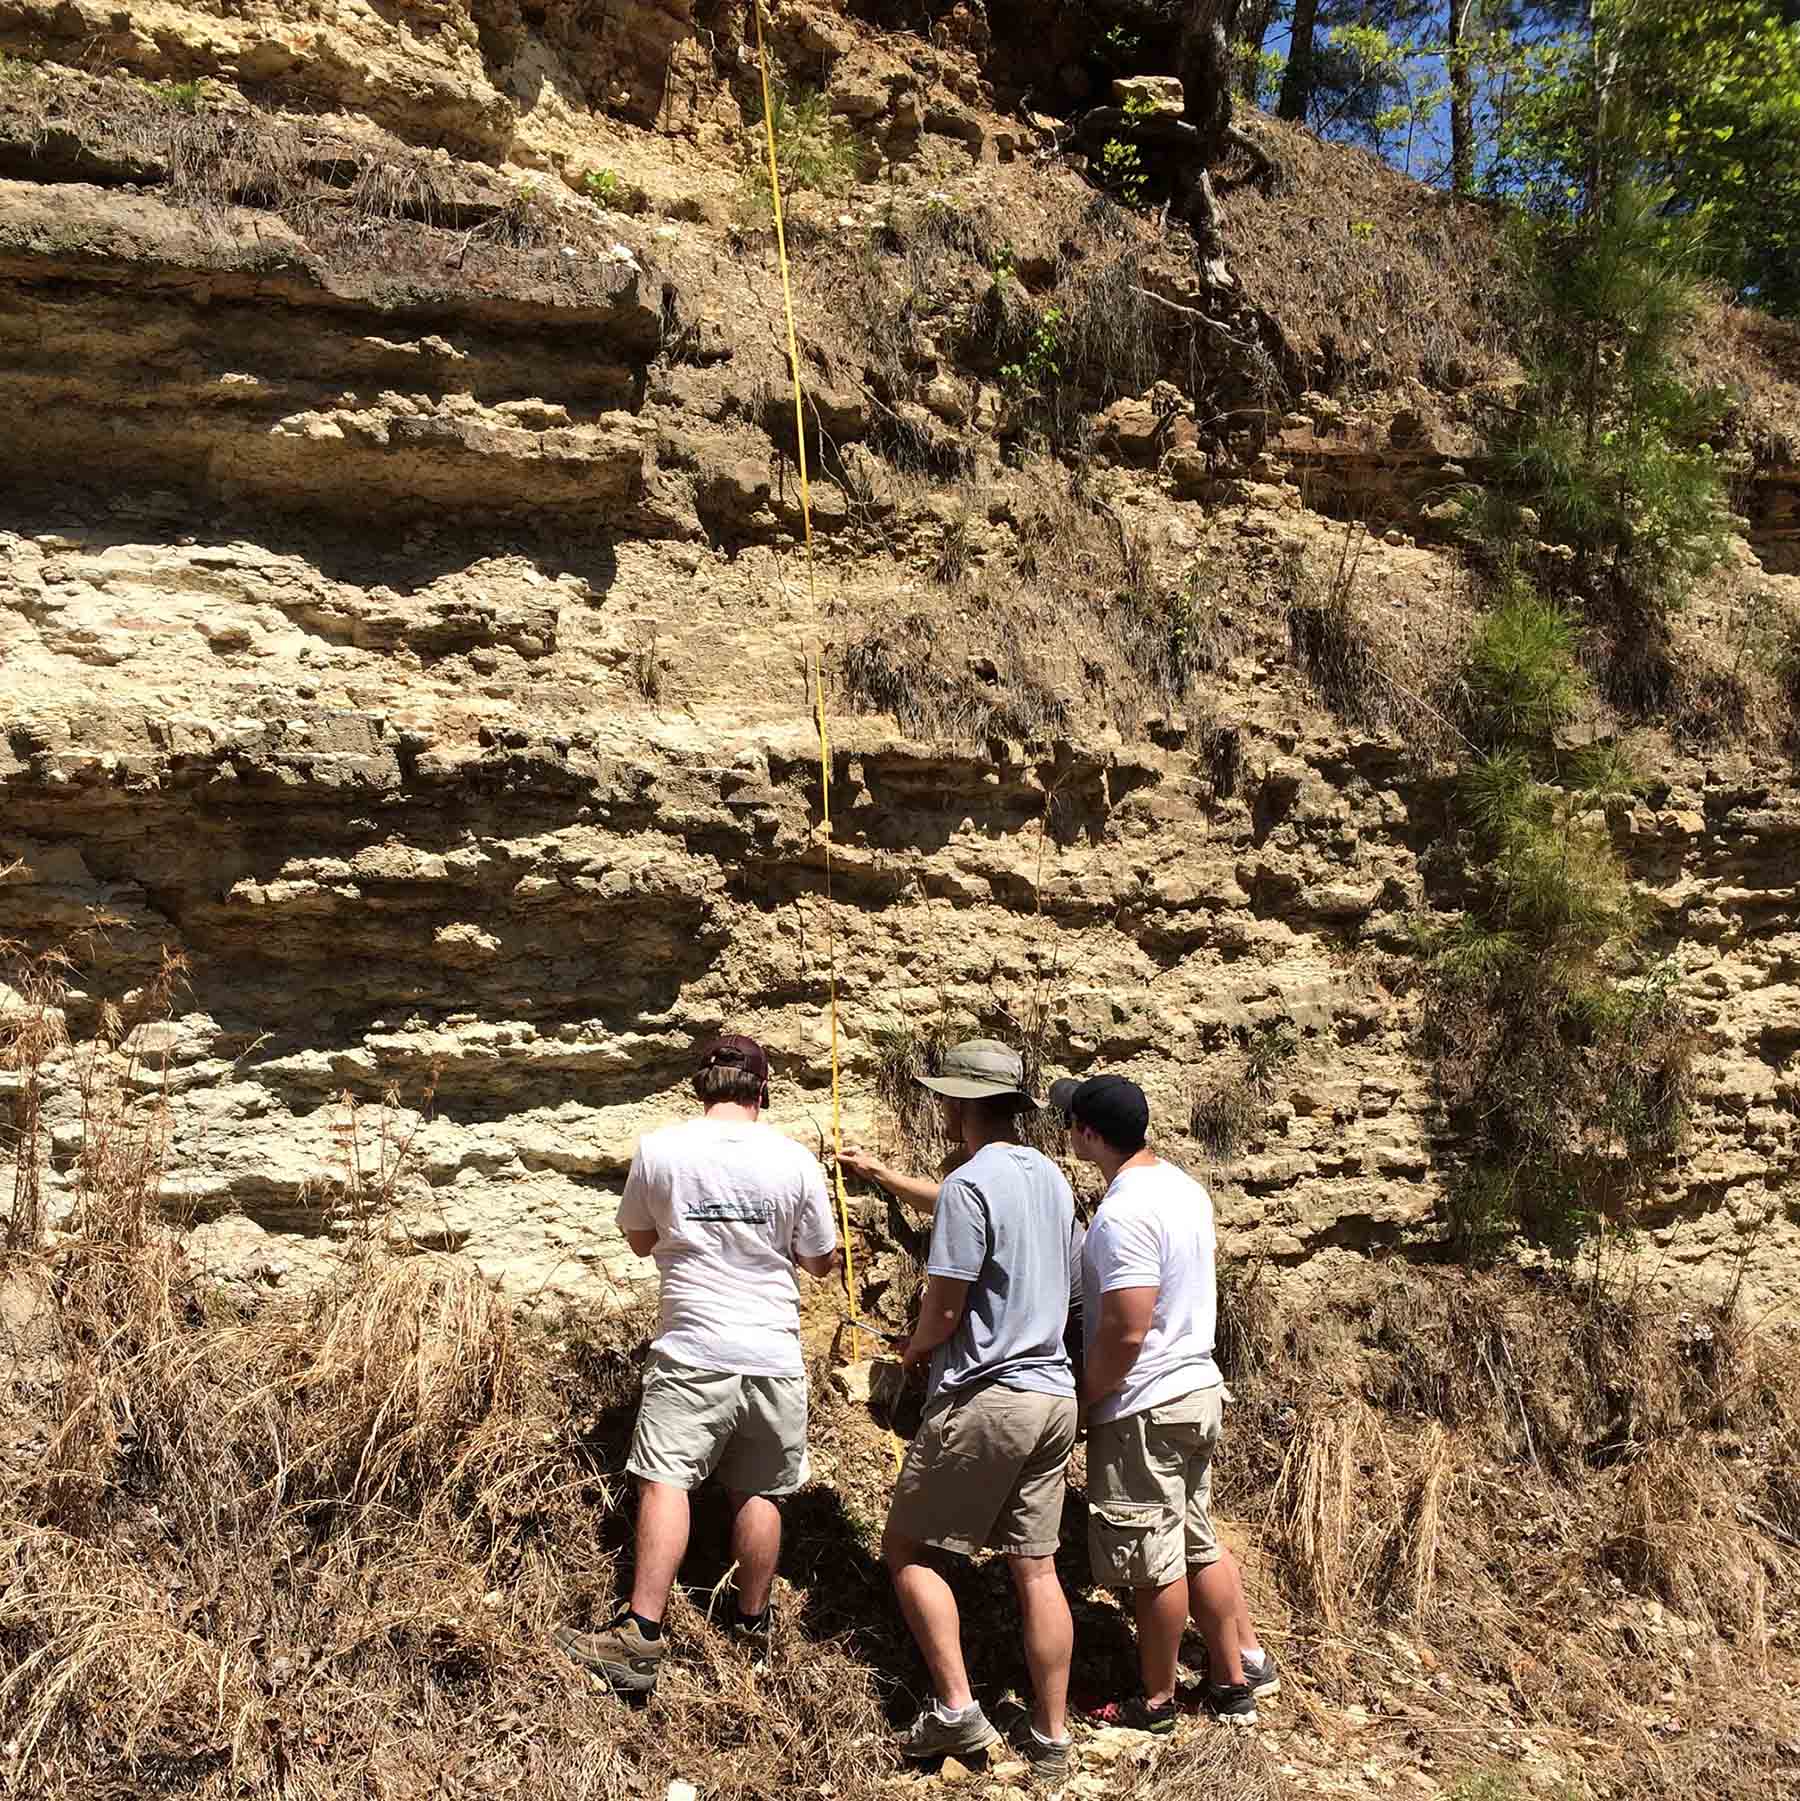 Students examine an Eocene marine marginal deposit outcrop